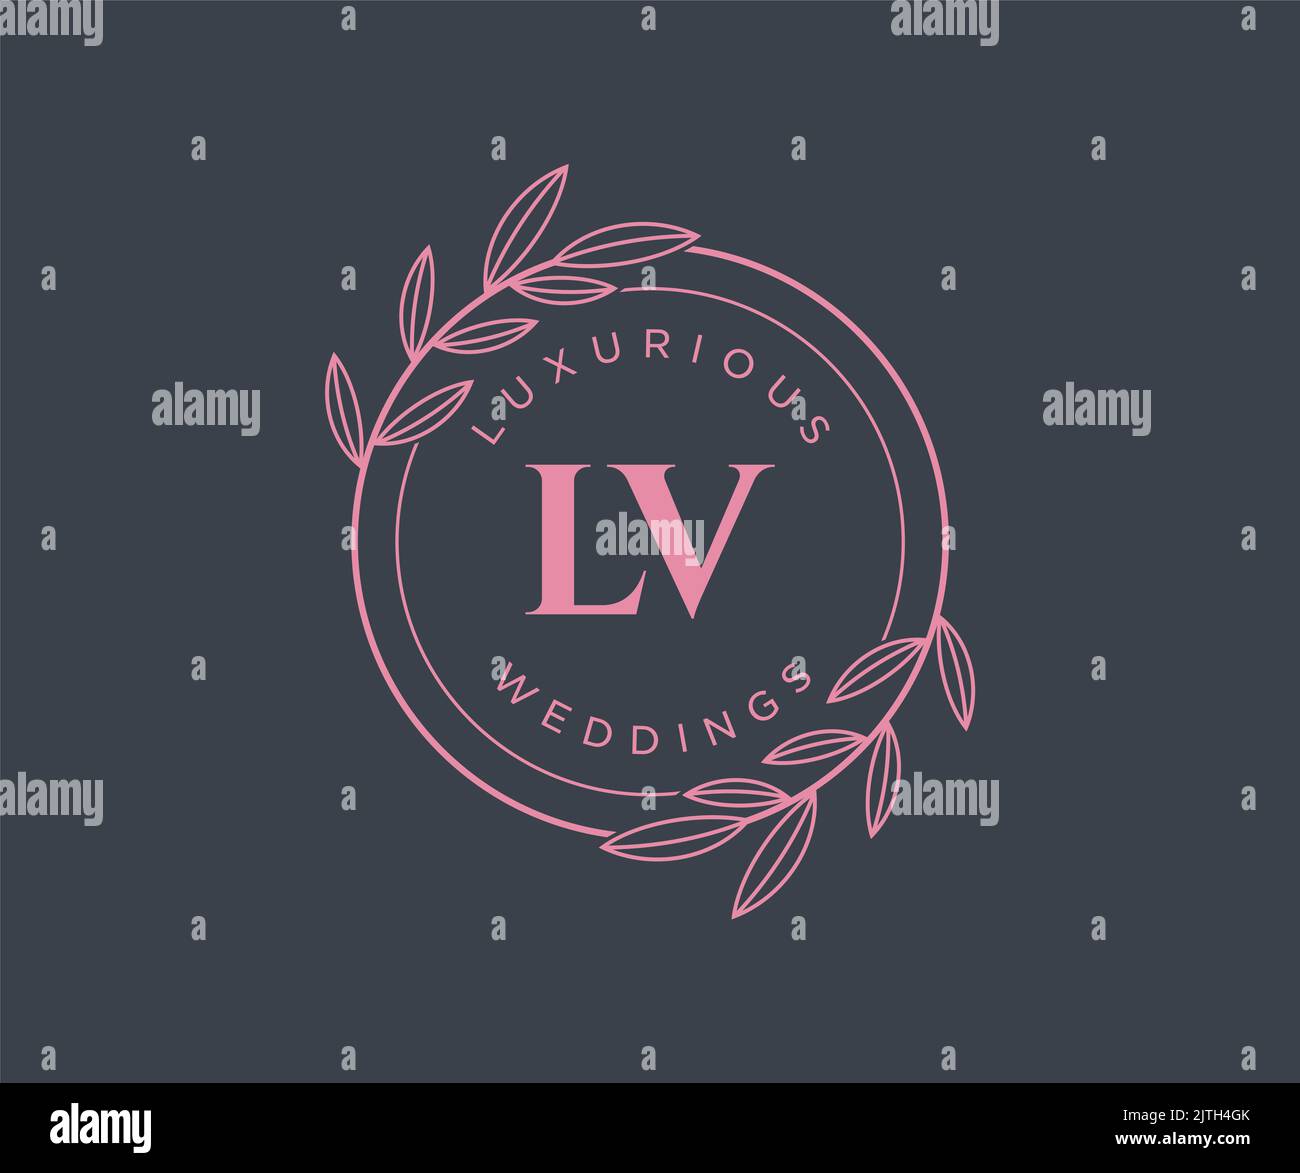 Lv monogram logo with circle outline design Vector Image